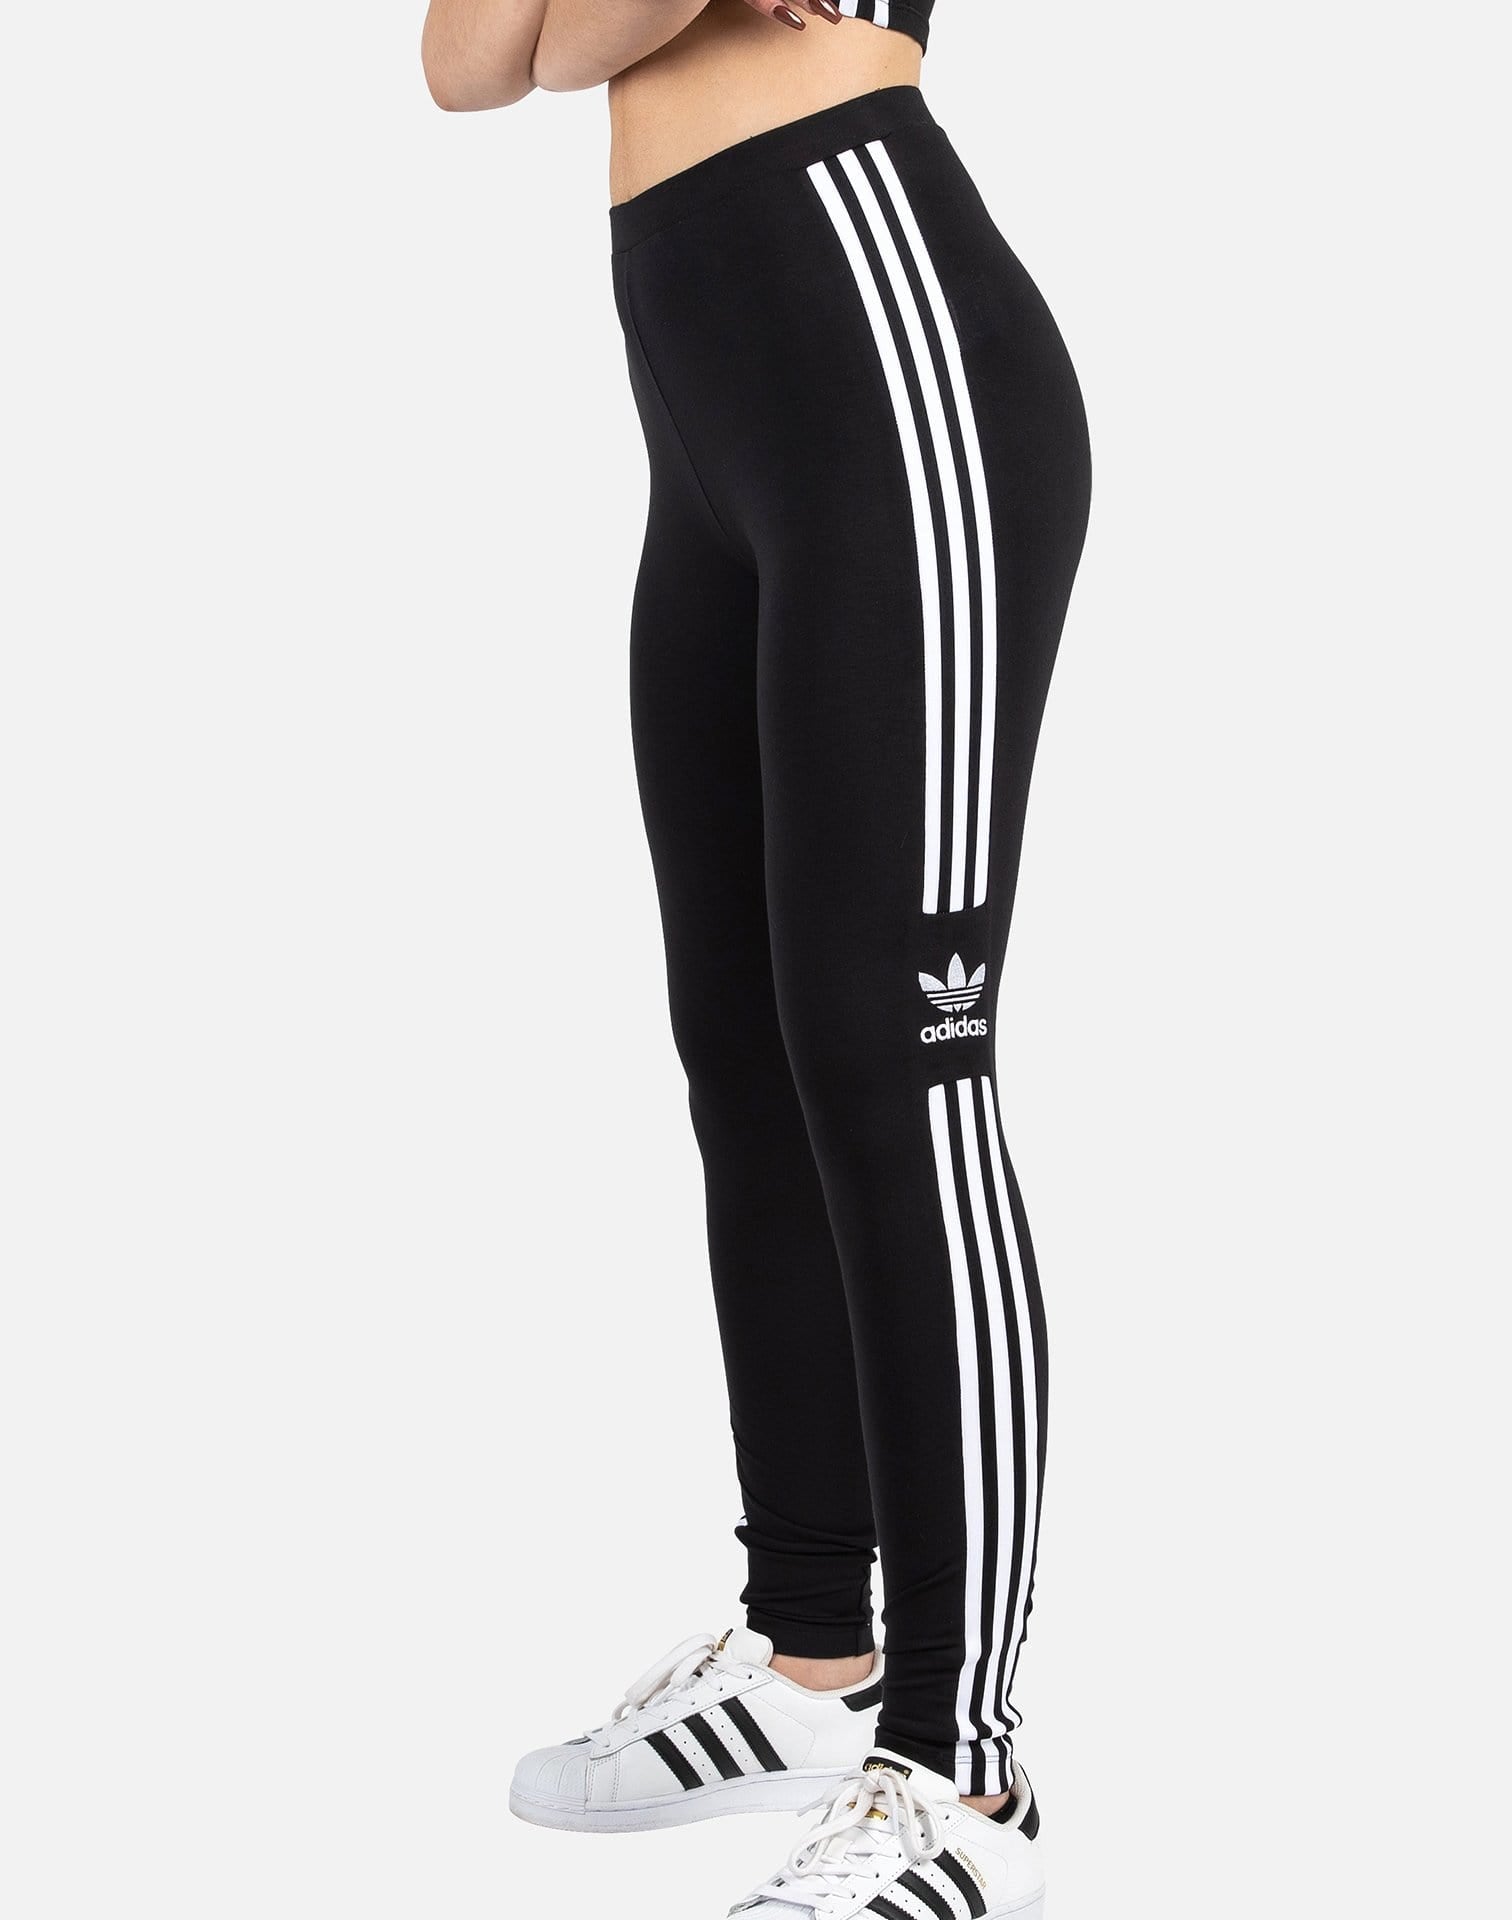 Buy Adidas Originals Trefoil Leggings - Black/White | Nelly.com